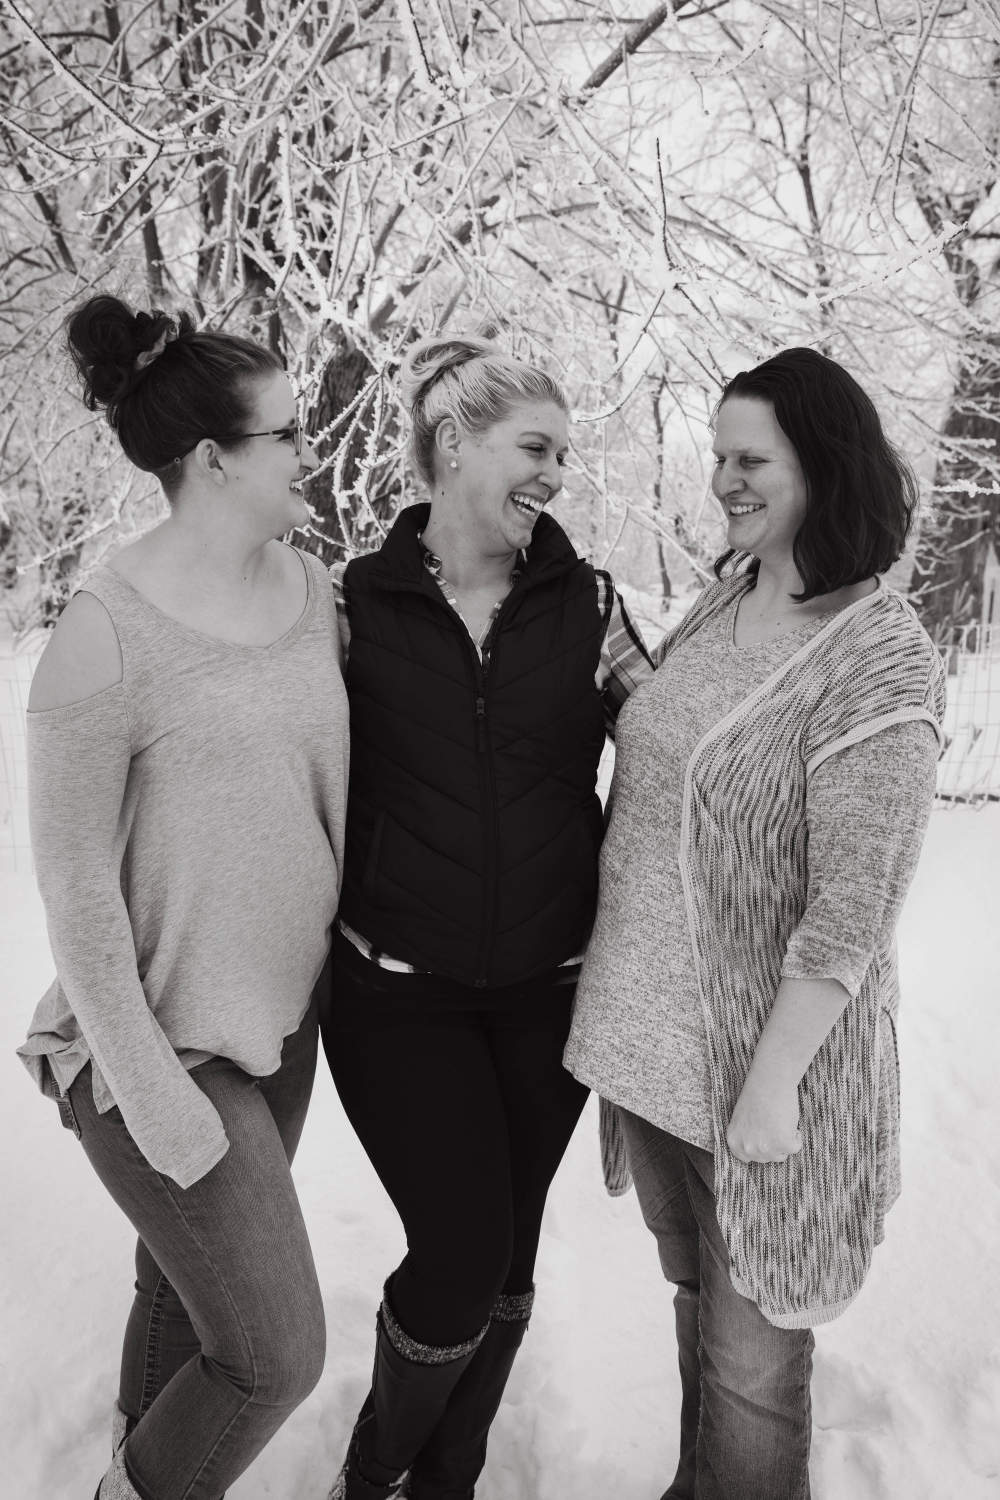 Winter Family Photo with Three Women